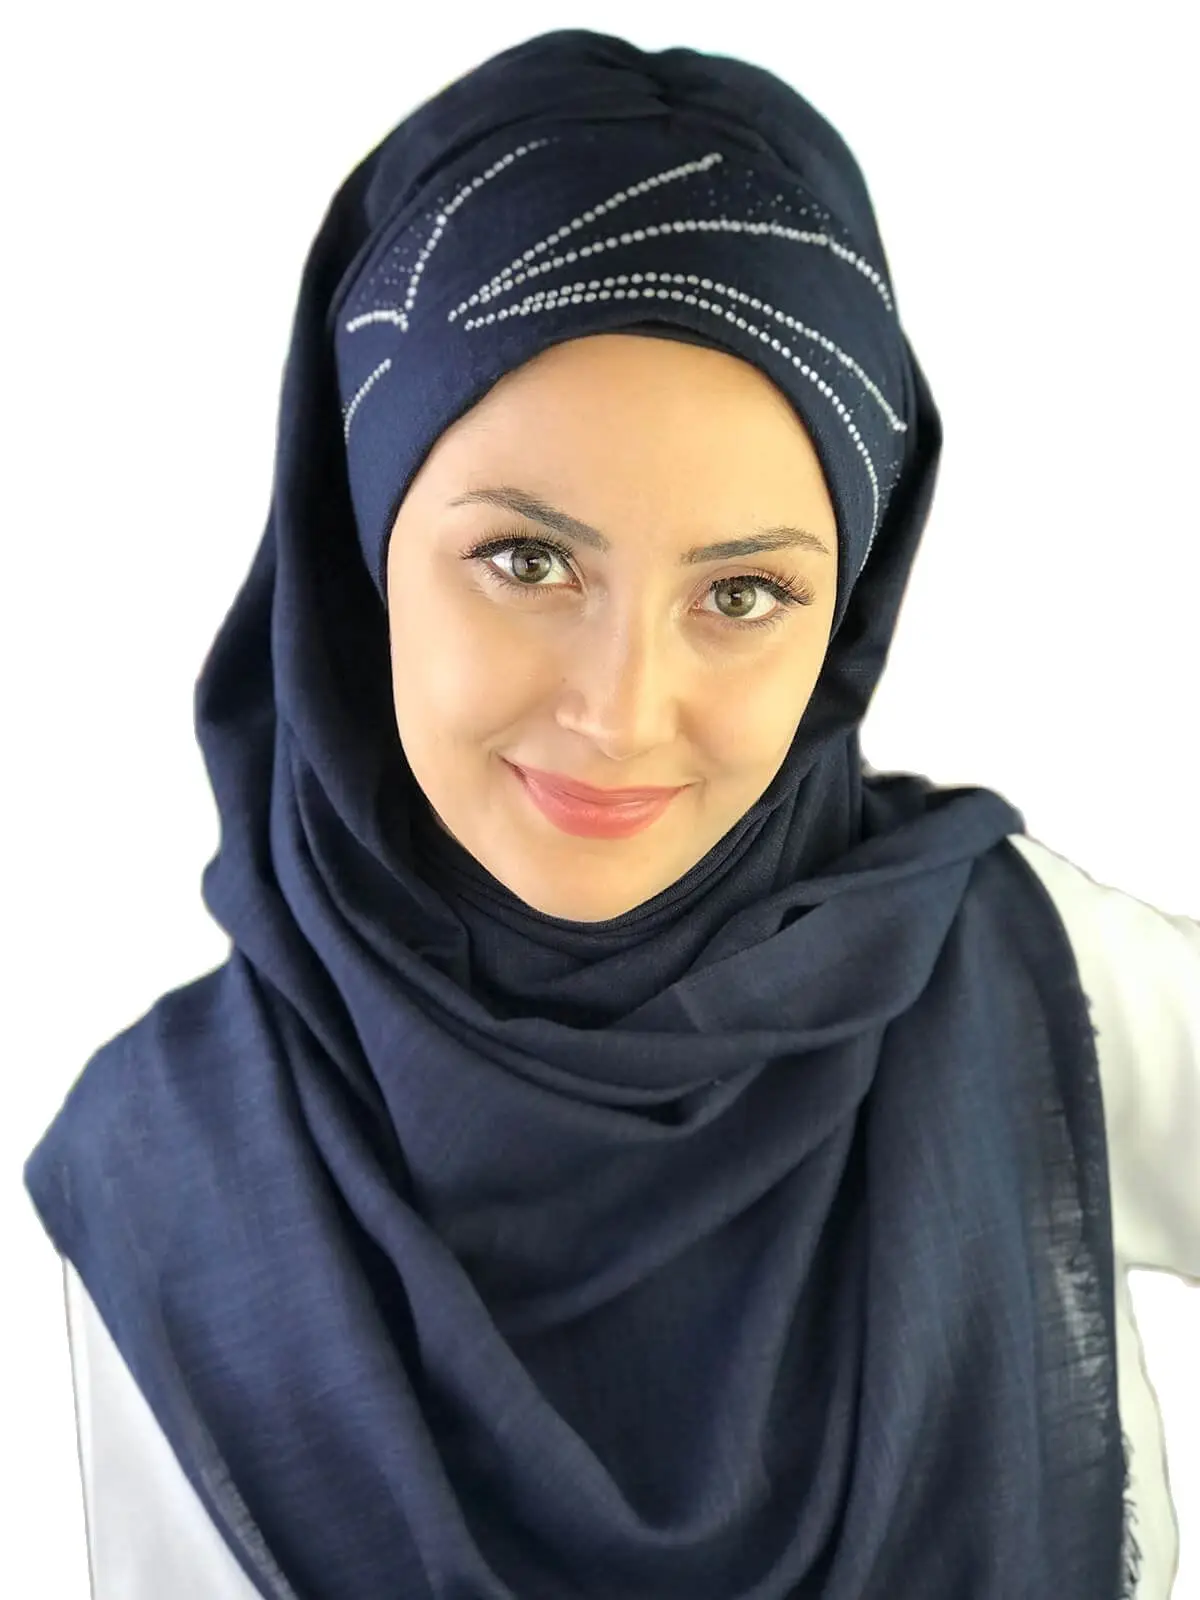 

2022 New Fashion Hijab Women Muslim Islamic Turban Scarf Hat Foulard Silver Sequin Printed Comet Patterned Navy Blue Ready Shawl